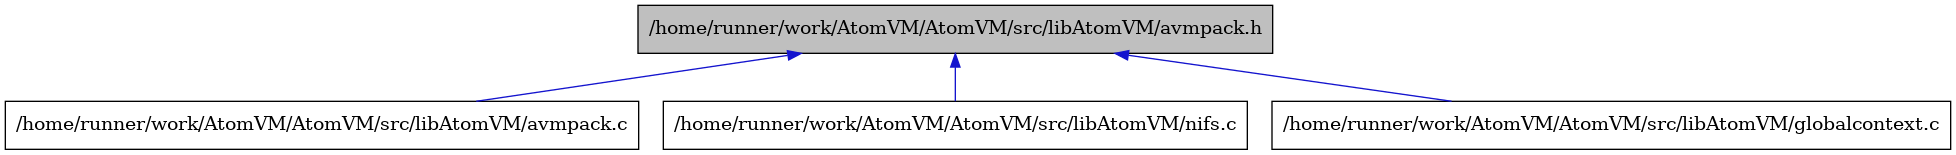 digraph {
    graph [bgcolor="#00000000"]
    node [shape=rectangle style=filled fillcolor="#FFFFFF" font=Helvetica padding=2]
    edge [color="#1414CE"]
    "2" [label="/home/runner/work/AtomVM/AtomVM/src/libAtomVM/avmpack.c" tooltip="/home/runner/work/AtomVM/AtomVM/src/libAtomVM/avmpack.c"]
    "1" [label="/home/runner/work/AtomVM/AtomVM/src/libAtomVM/avmpack.h" tooltip="/home/runner/work/AtomVM/AtomVM/src/libAtomVM/avmpack.h" fillcolor="#BFBFBF"]
    "4" [label="/home/runner/work/AtomVM/AtomVM/src/libAtomVM/nifs.c" tooltip="/home/runner/work/AtomVM/AtomVM/src/libAtomVM/nifs.c"]
    "3" [label="/home/runner/work/AtomVM/AtomVM/src/libAtomVM/globalcontext.c" tooltip="/home/runner/work/AtomVM/AtomVM/src/libAtomVM/globalcontext.c"]
    "1" -> "2" [dir=back tooltip="include"]
    "1" -> "3" [dir=back tooltip="include"]
    "1" -> "4" [dir=back tooltip="include"]
}